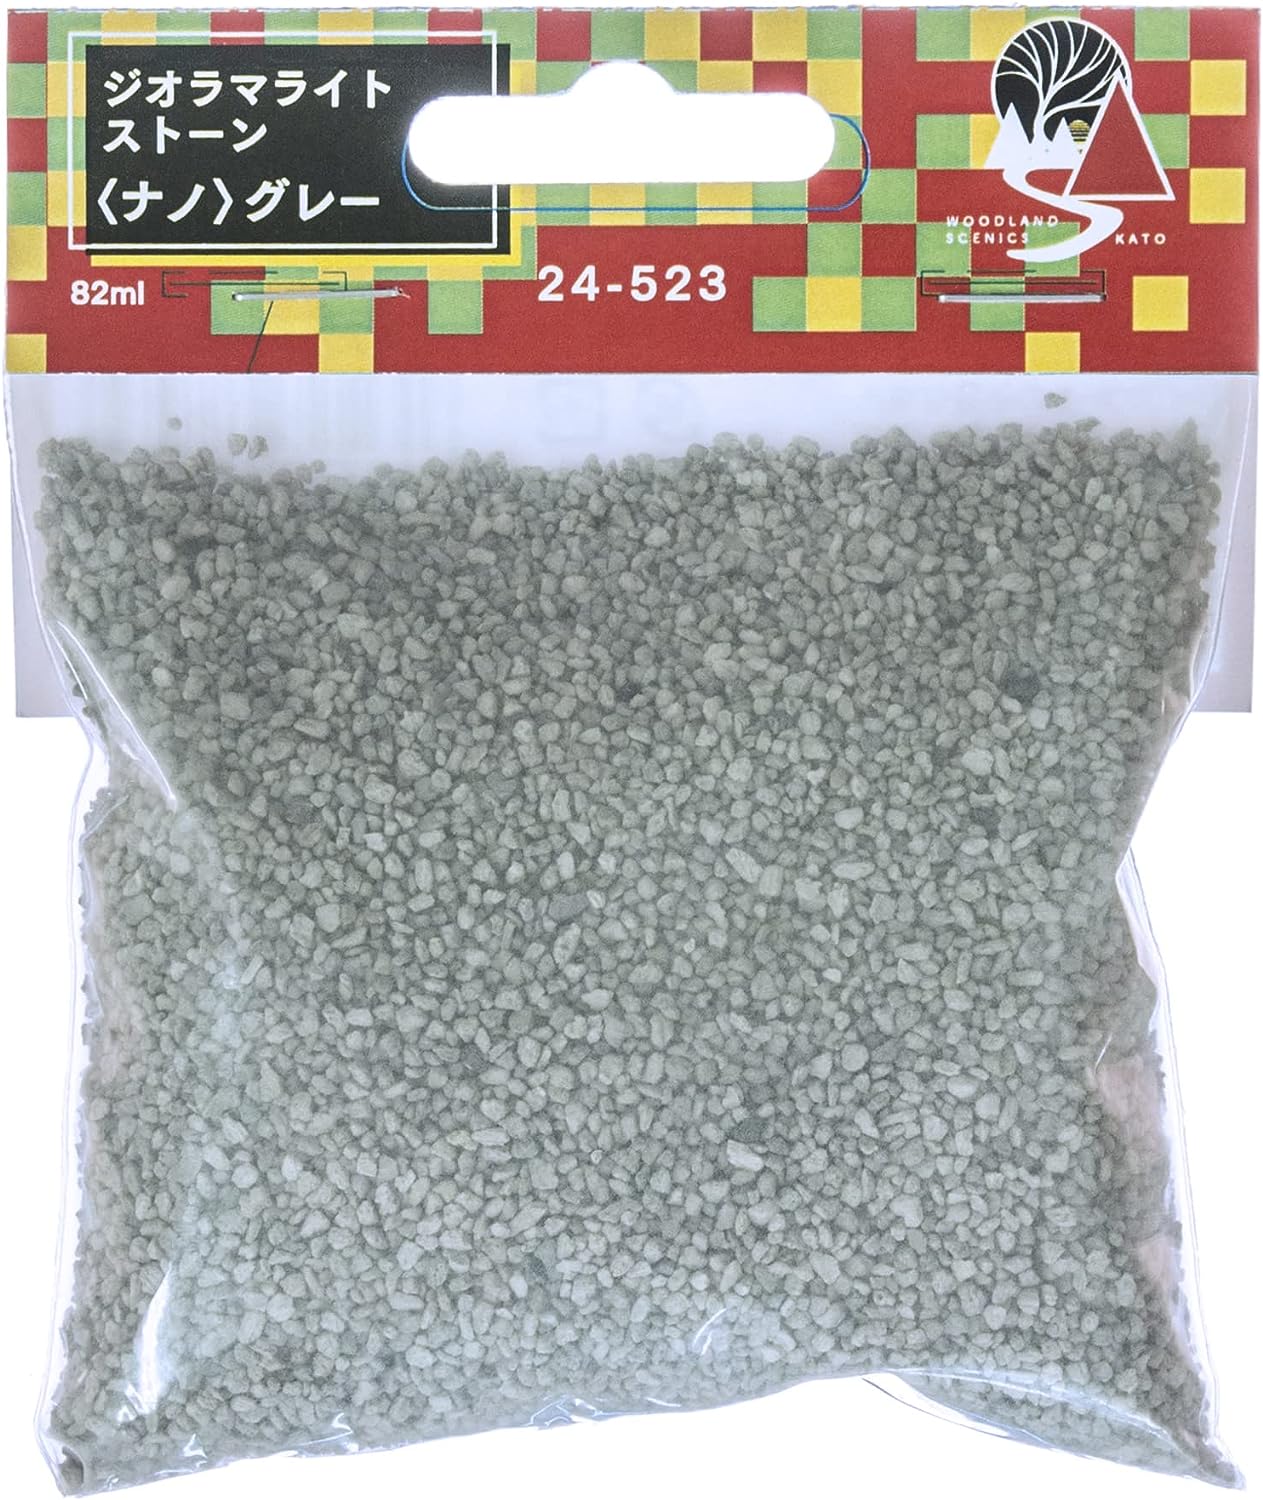 KATO 24-523 Diorama Light Stone Nano 82ml Gray - BanzaiHobby